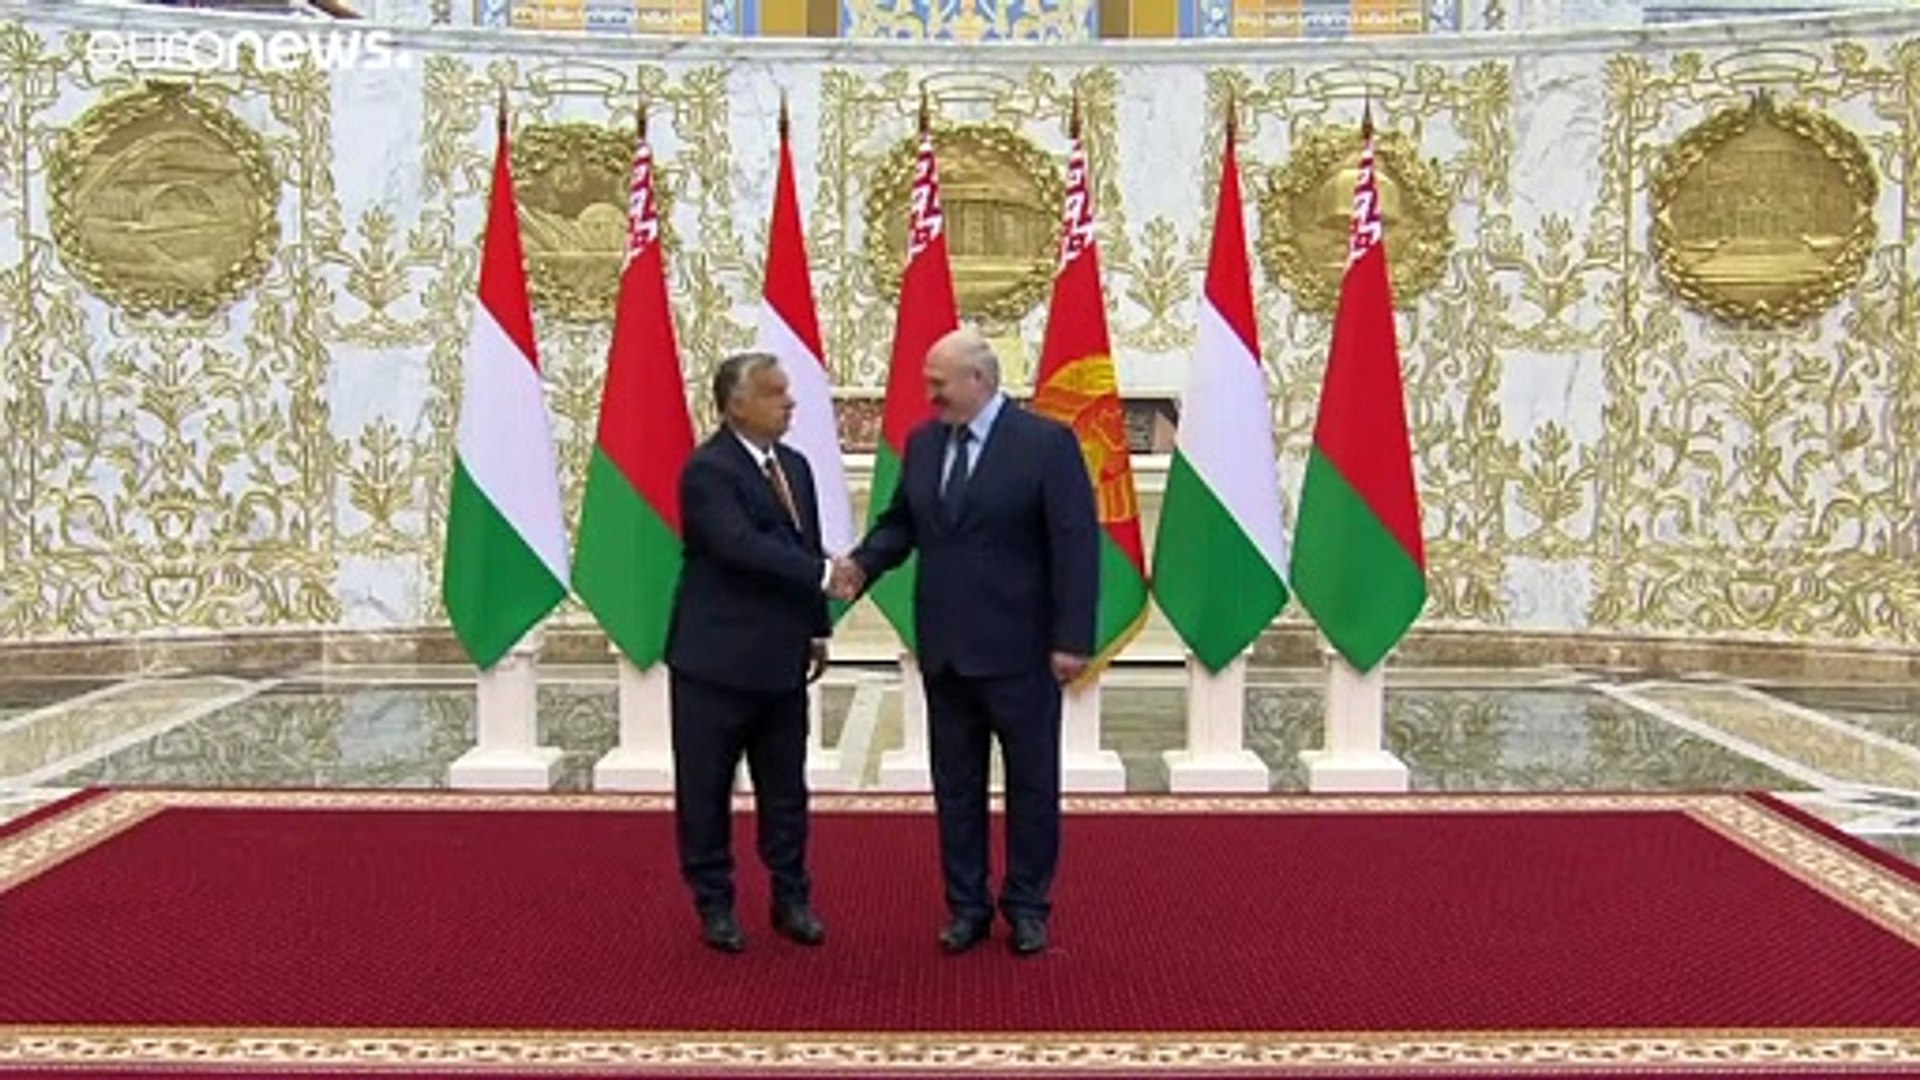 Viktor Orbán pretende estreitar laços com a Bielorrússia